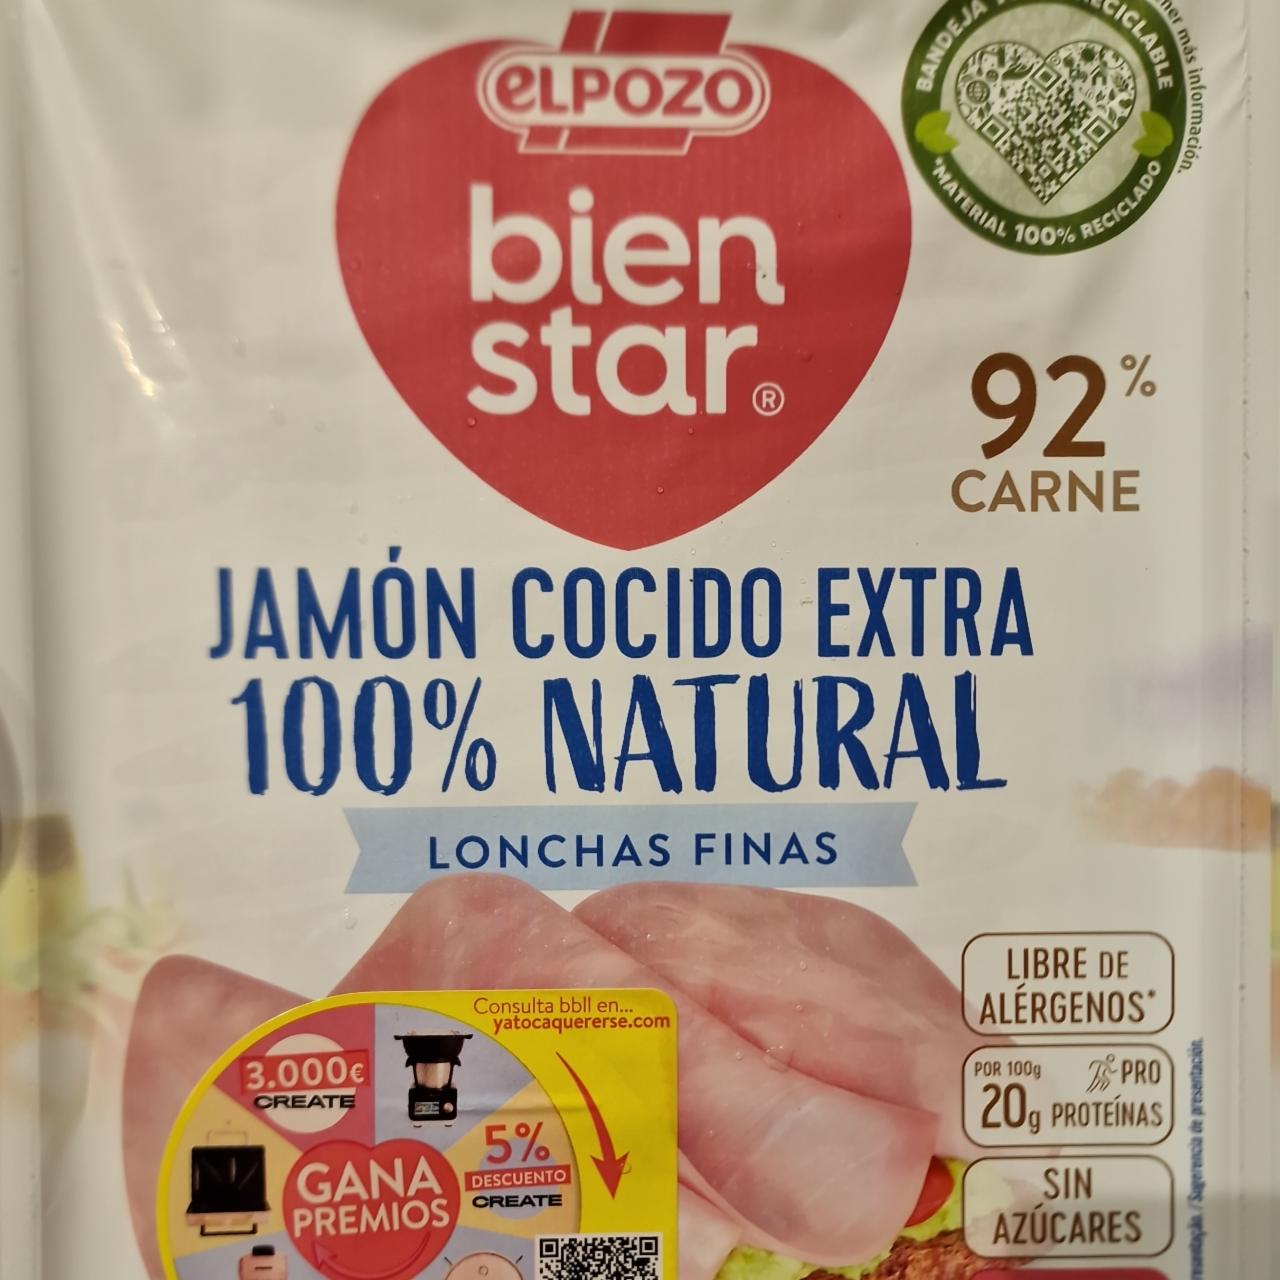 Fotografie - Jamón cocido extra 100% natural Elpozo